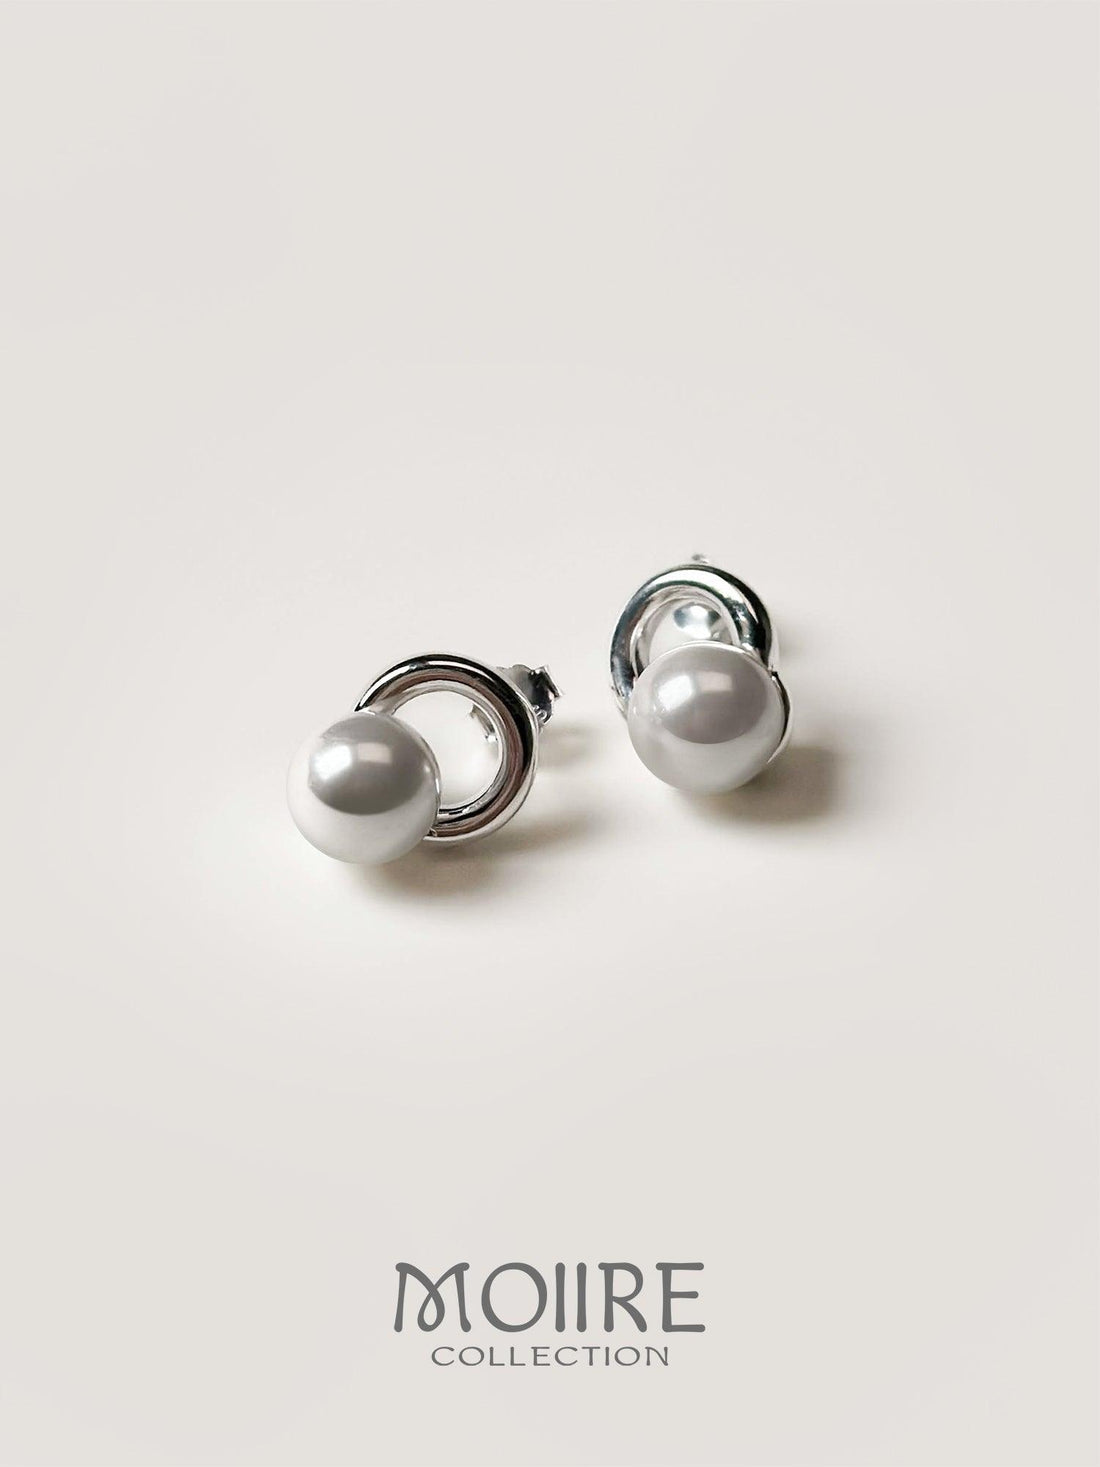 Moiire 自訂 | 白富美的優雅 - Moiire Collection